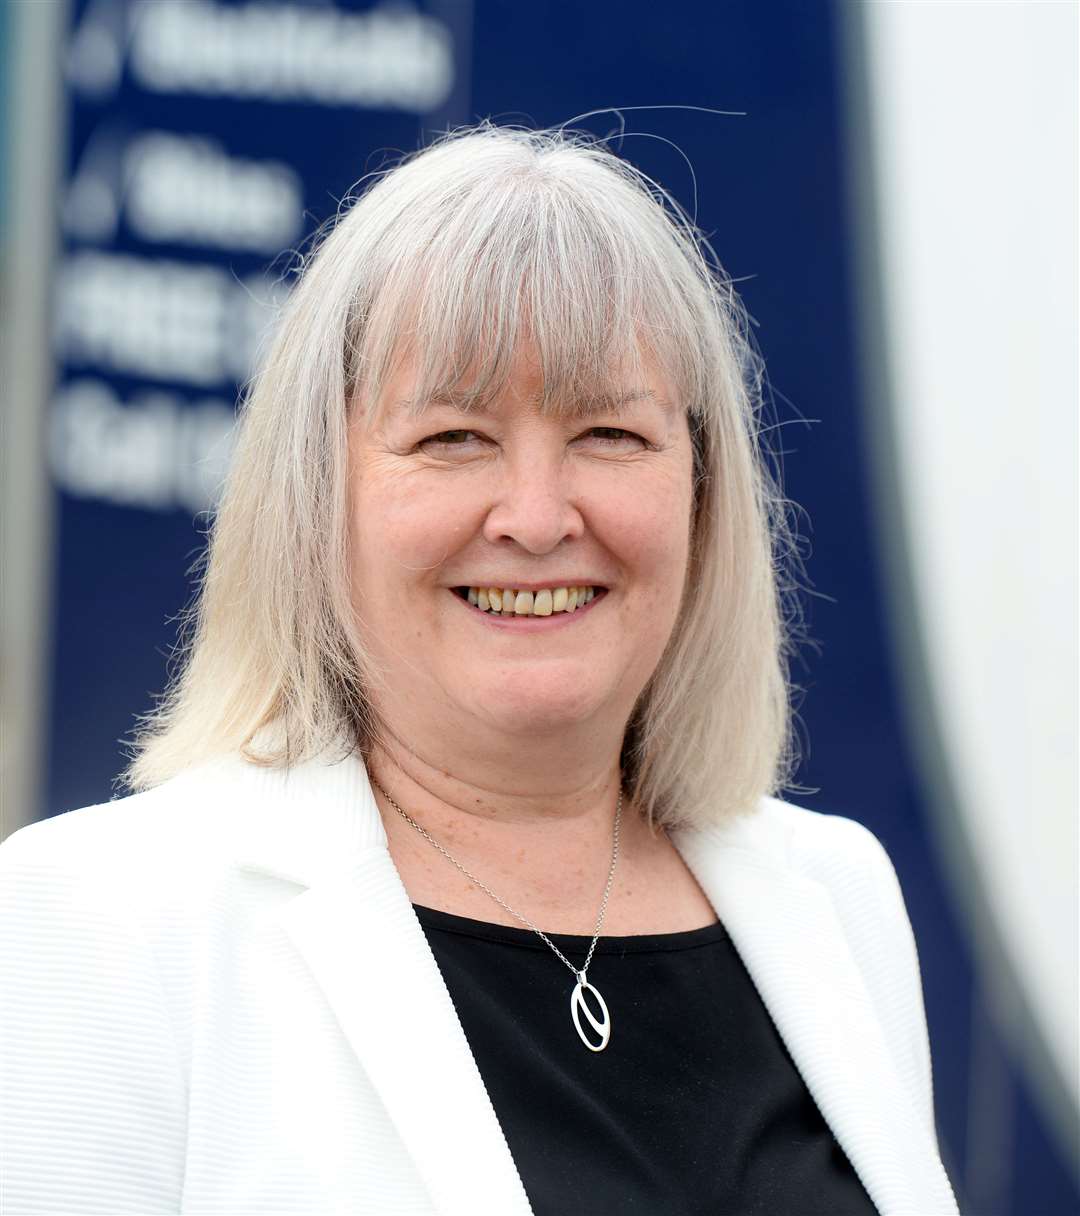 Rhoda Grant has go a debate in Scottish Parliament on NHS recruitment